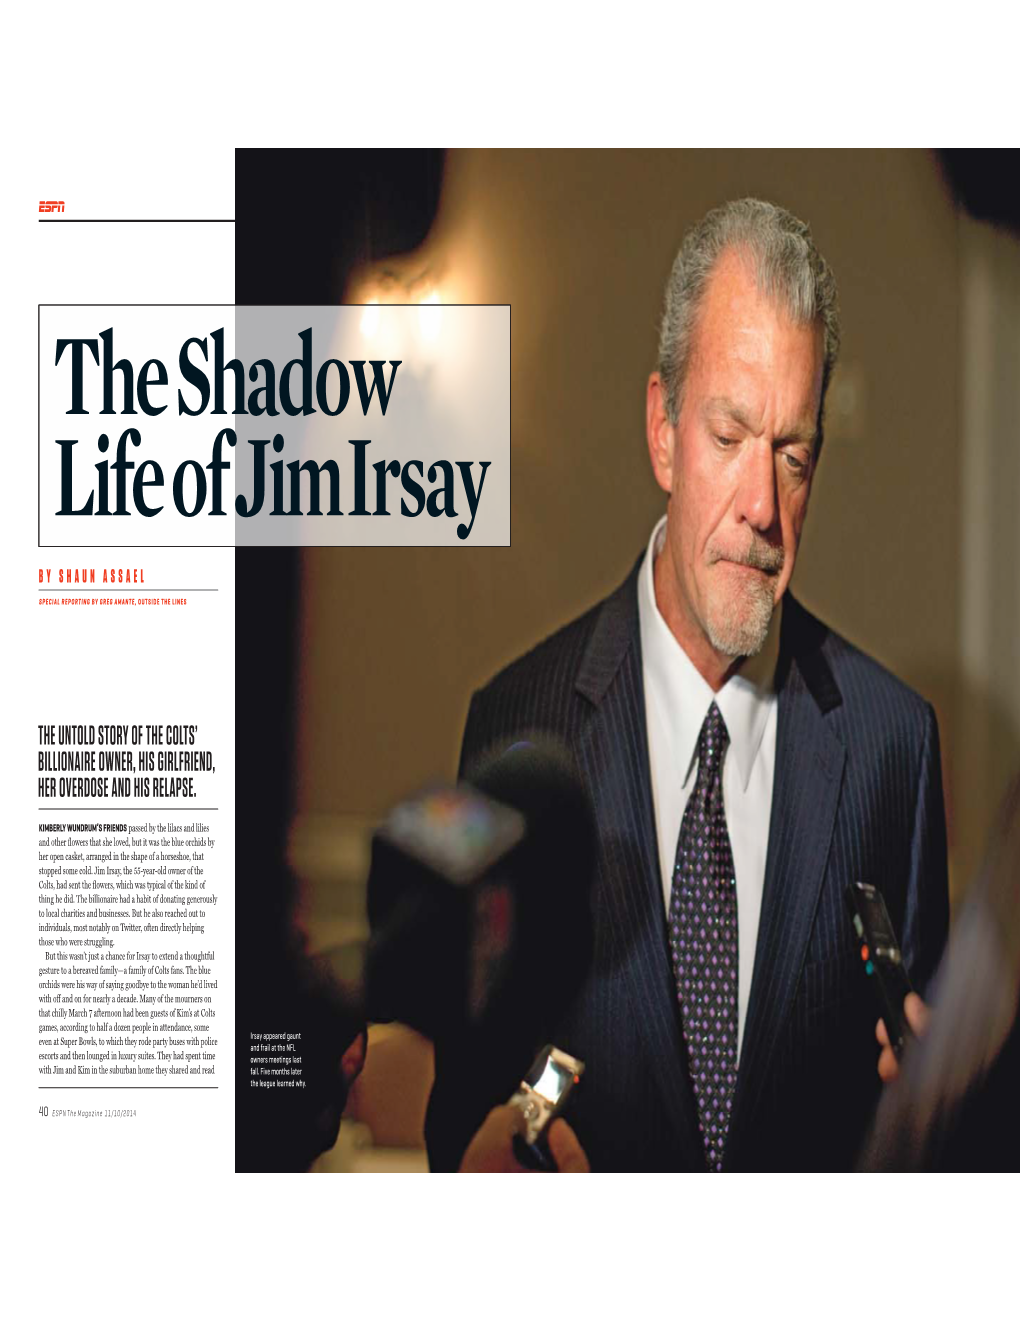 The Shadow Life of Jim Irsay by SHAUN ASSAEL